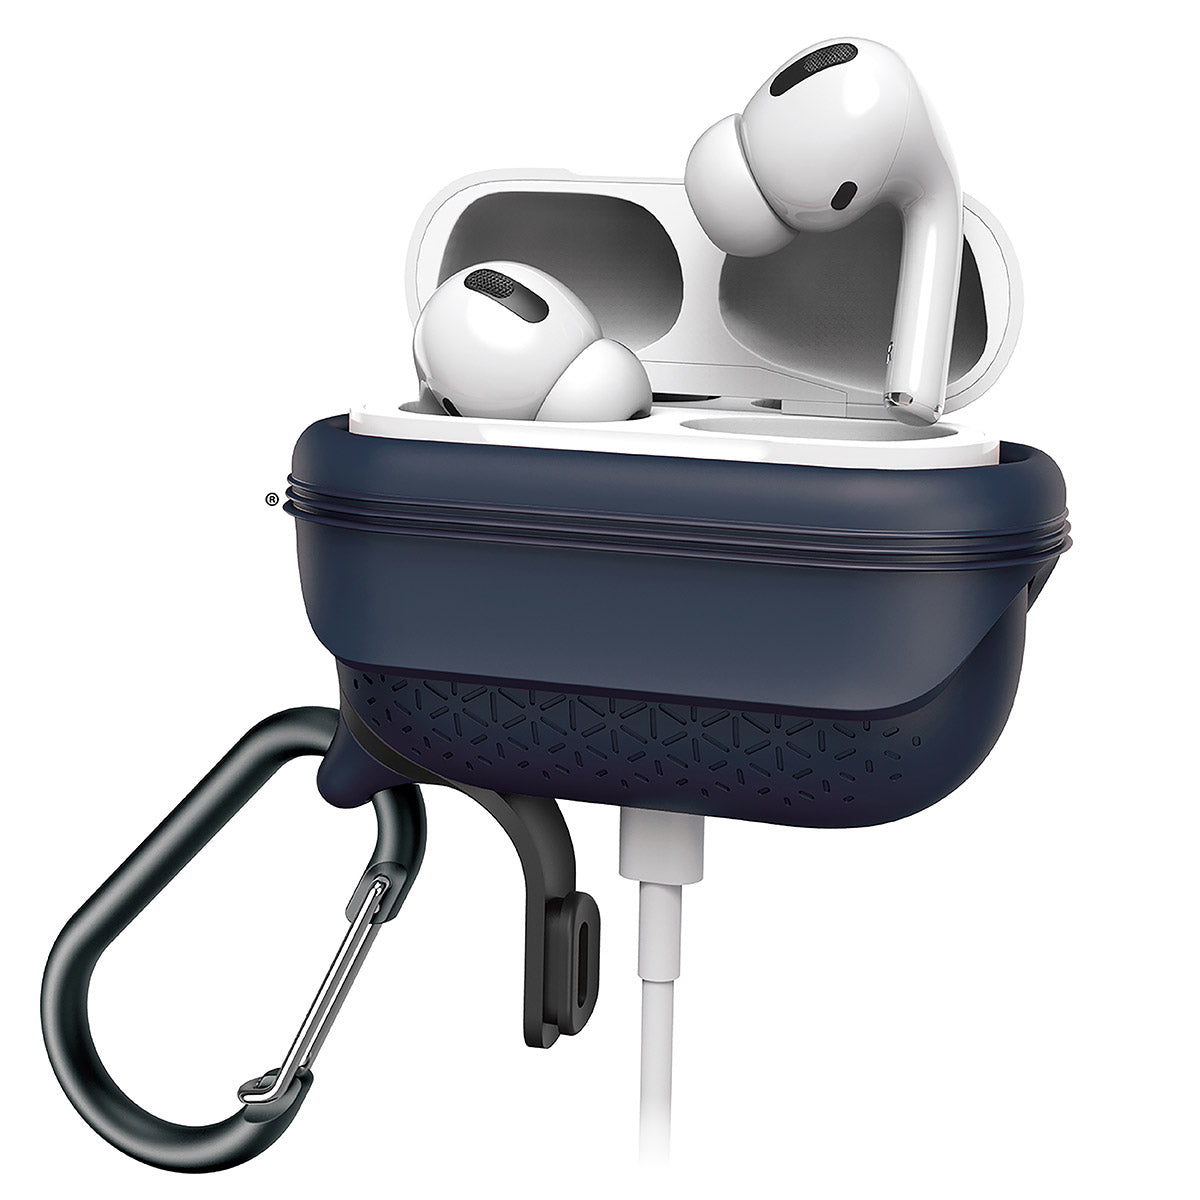 catalyst airpods pro gen 2 1 waterproof case carabiner premium edition midnight blue open lid with airpods